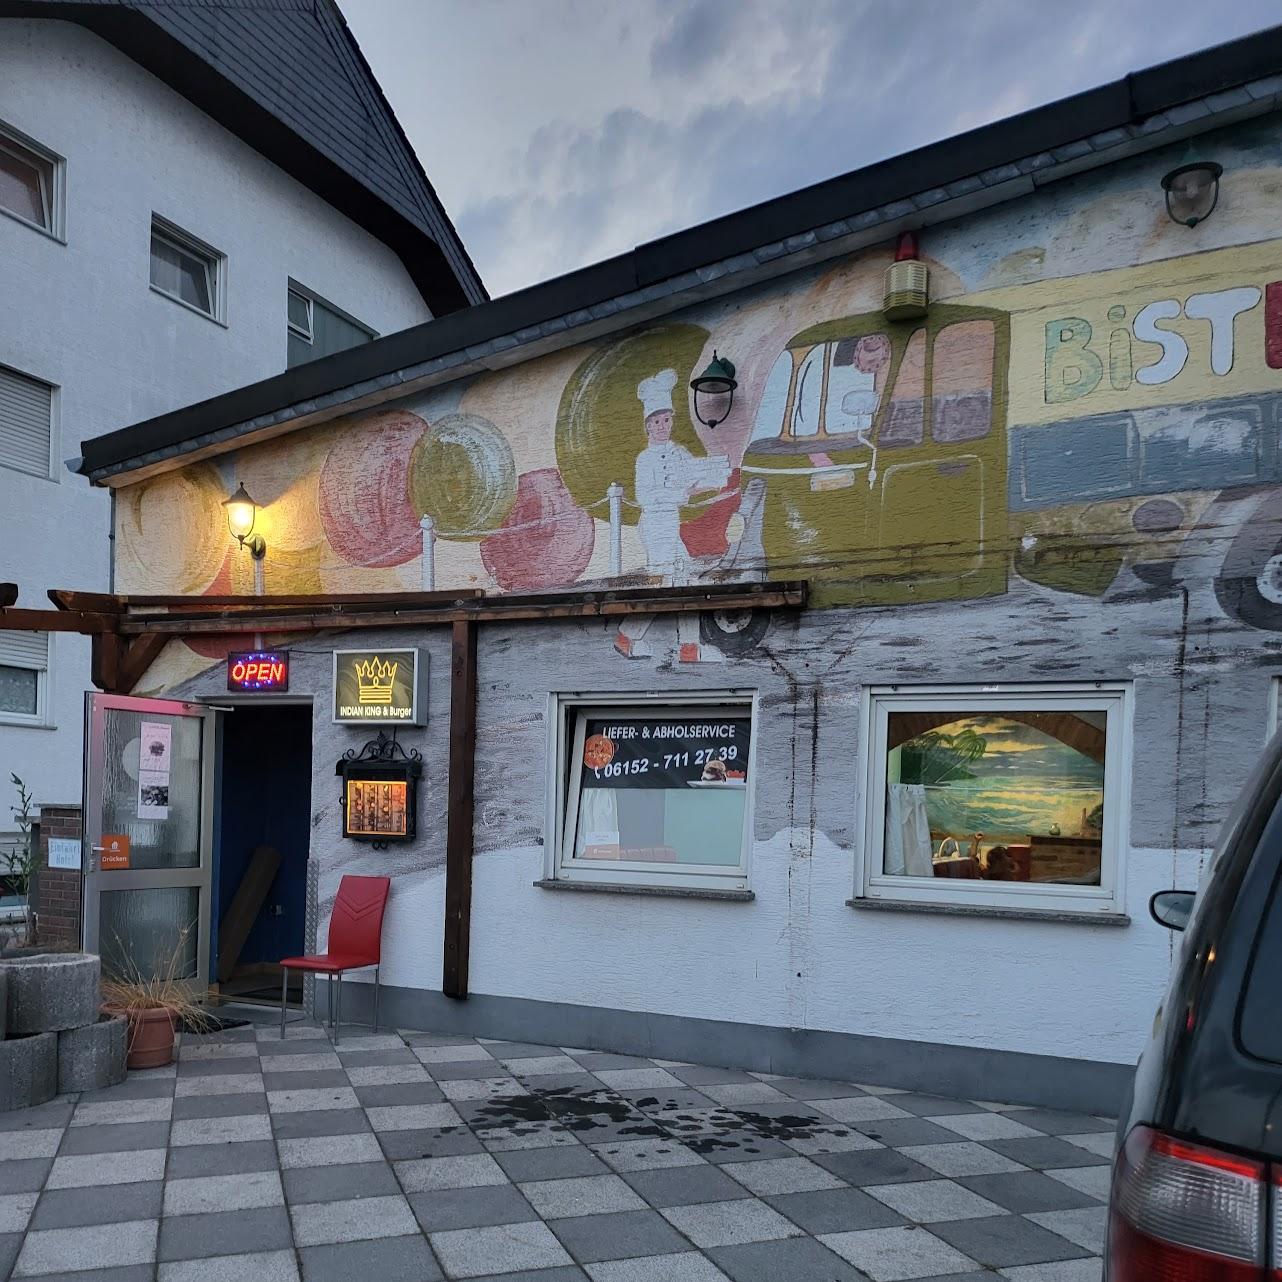 Restaurant "Indian King & Burger" in Nauheim